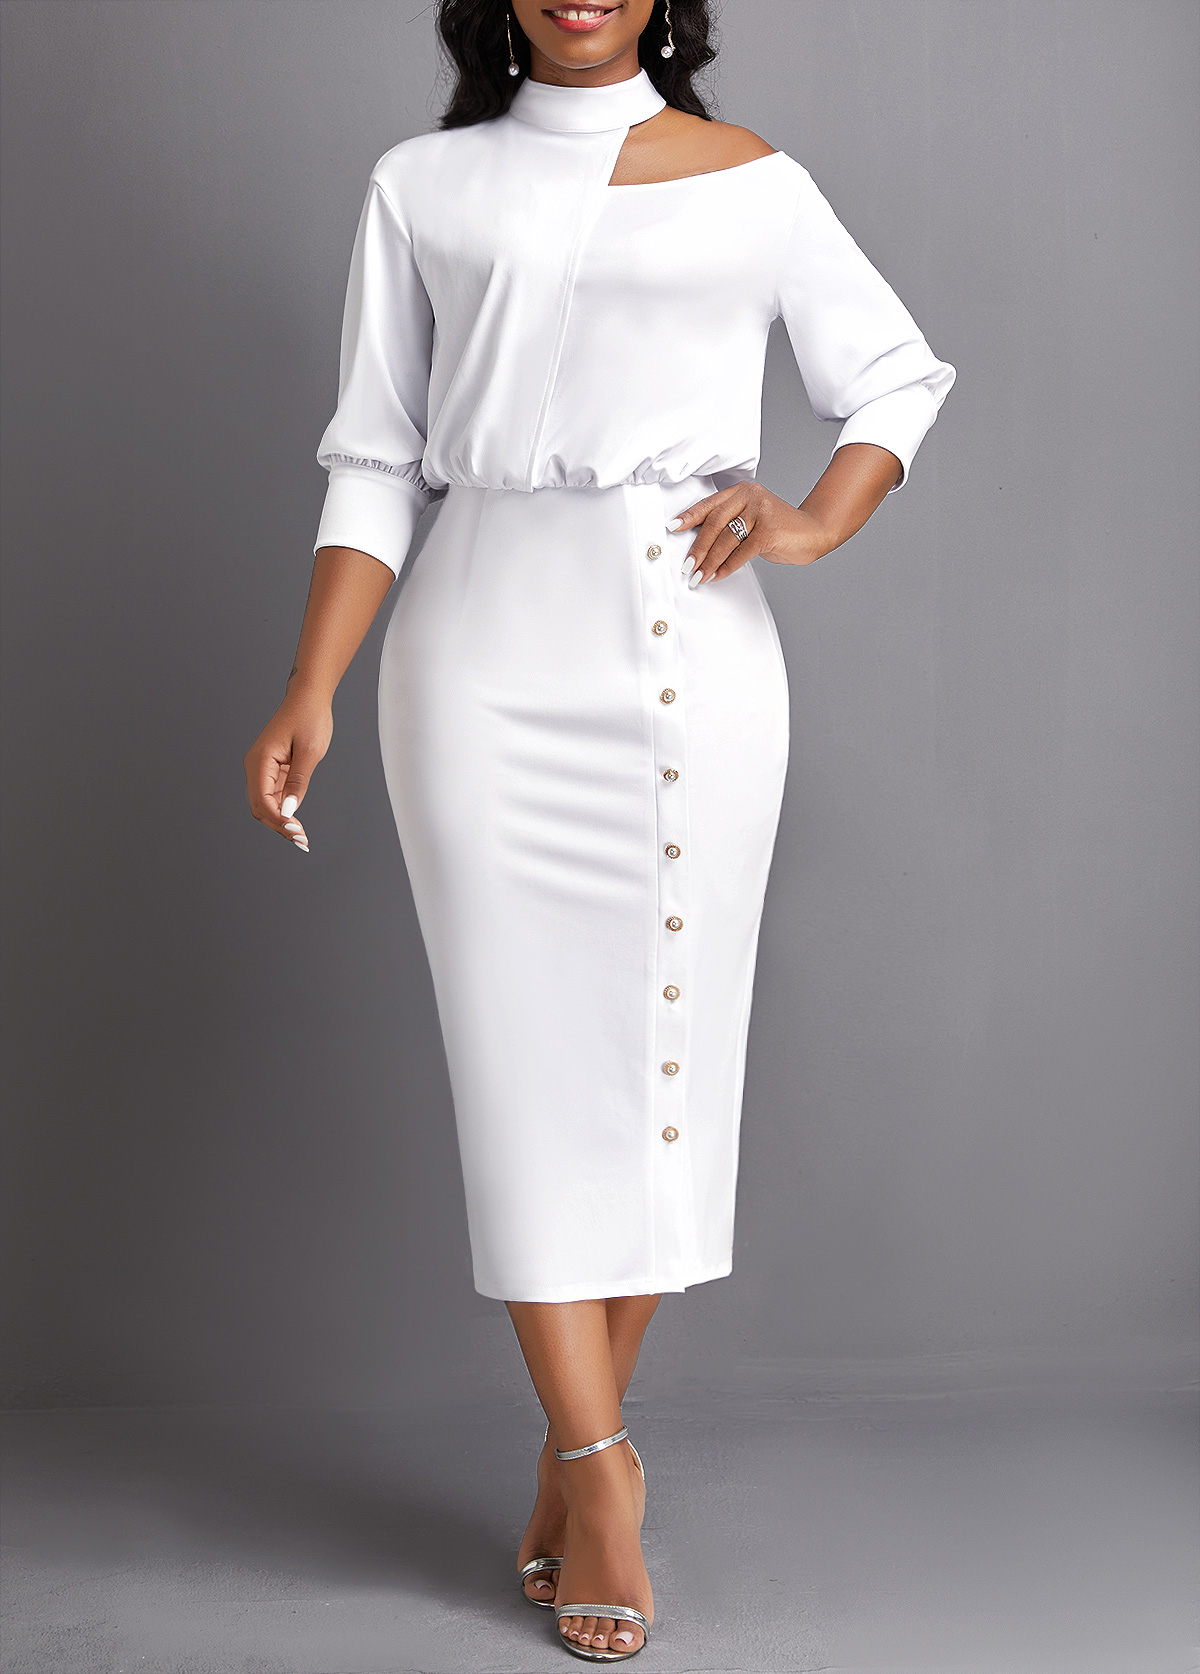 White Asymmetry Three Quarter Length Sleeve Bodycon Dress